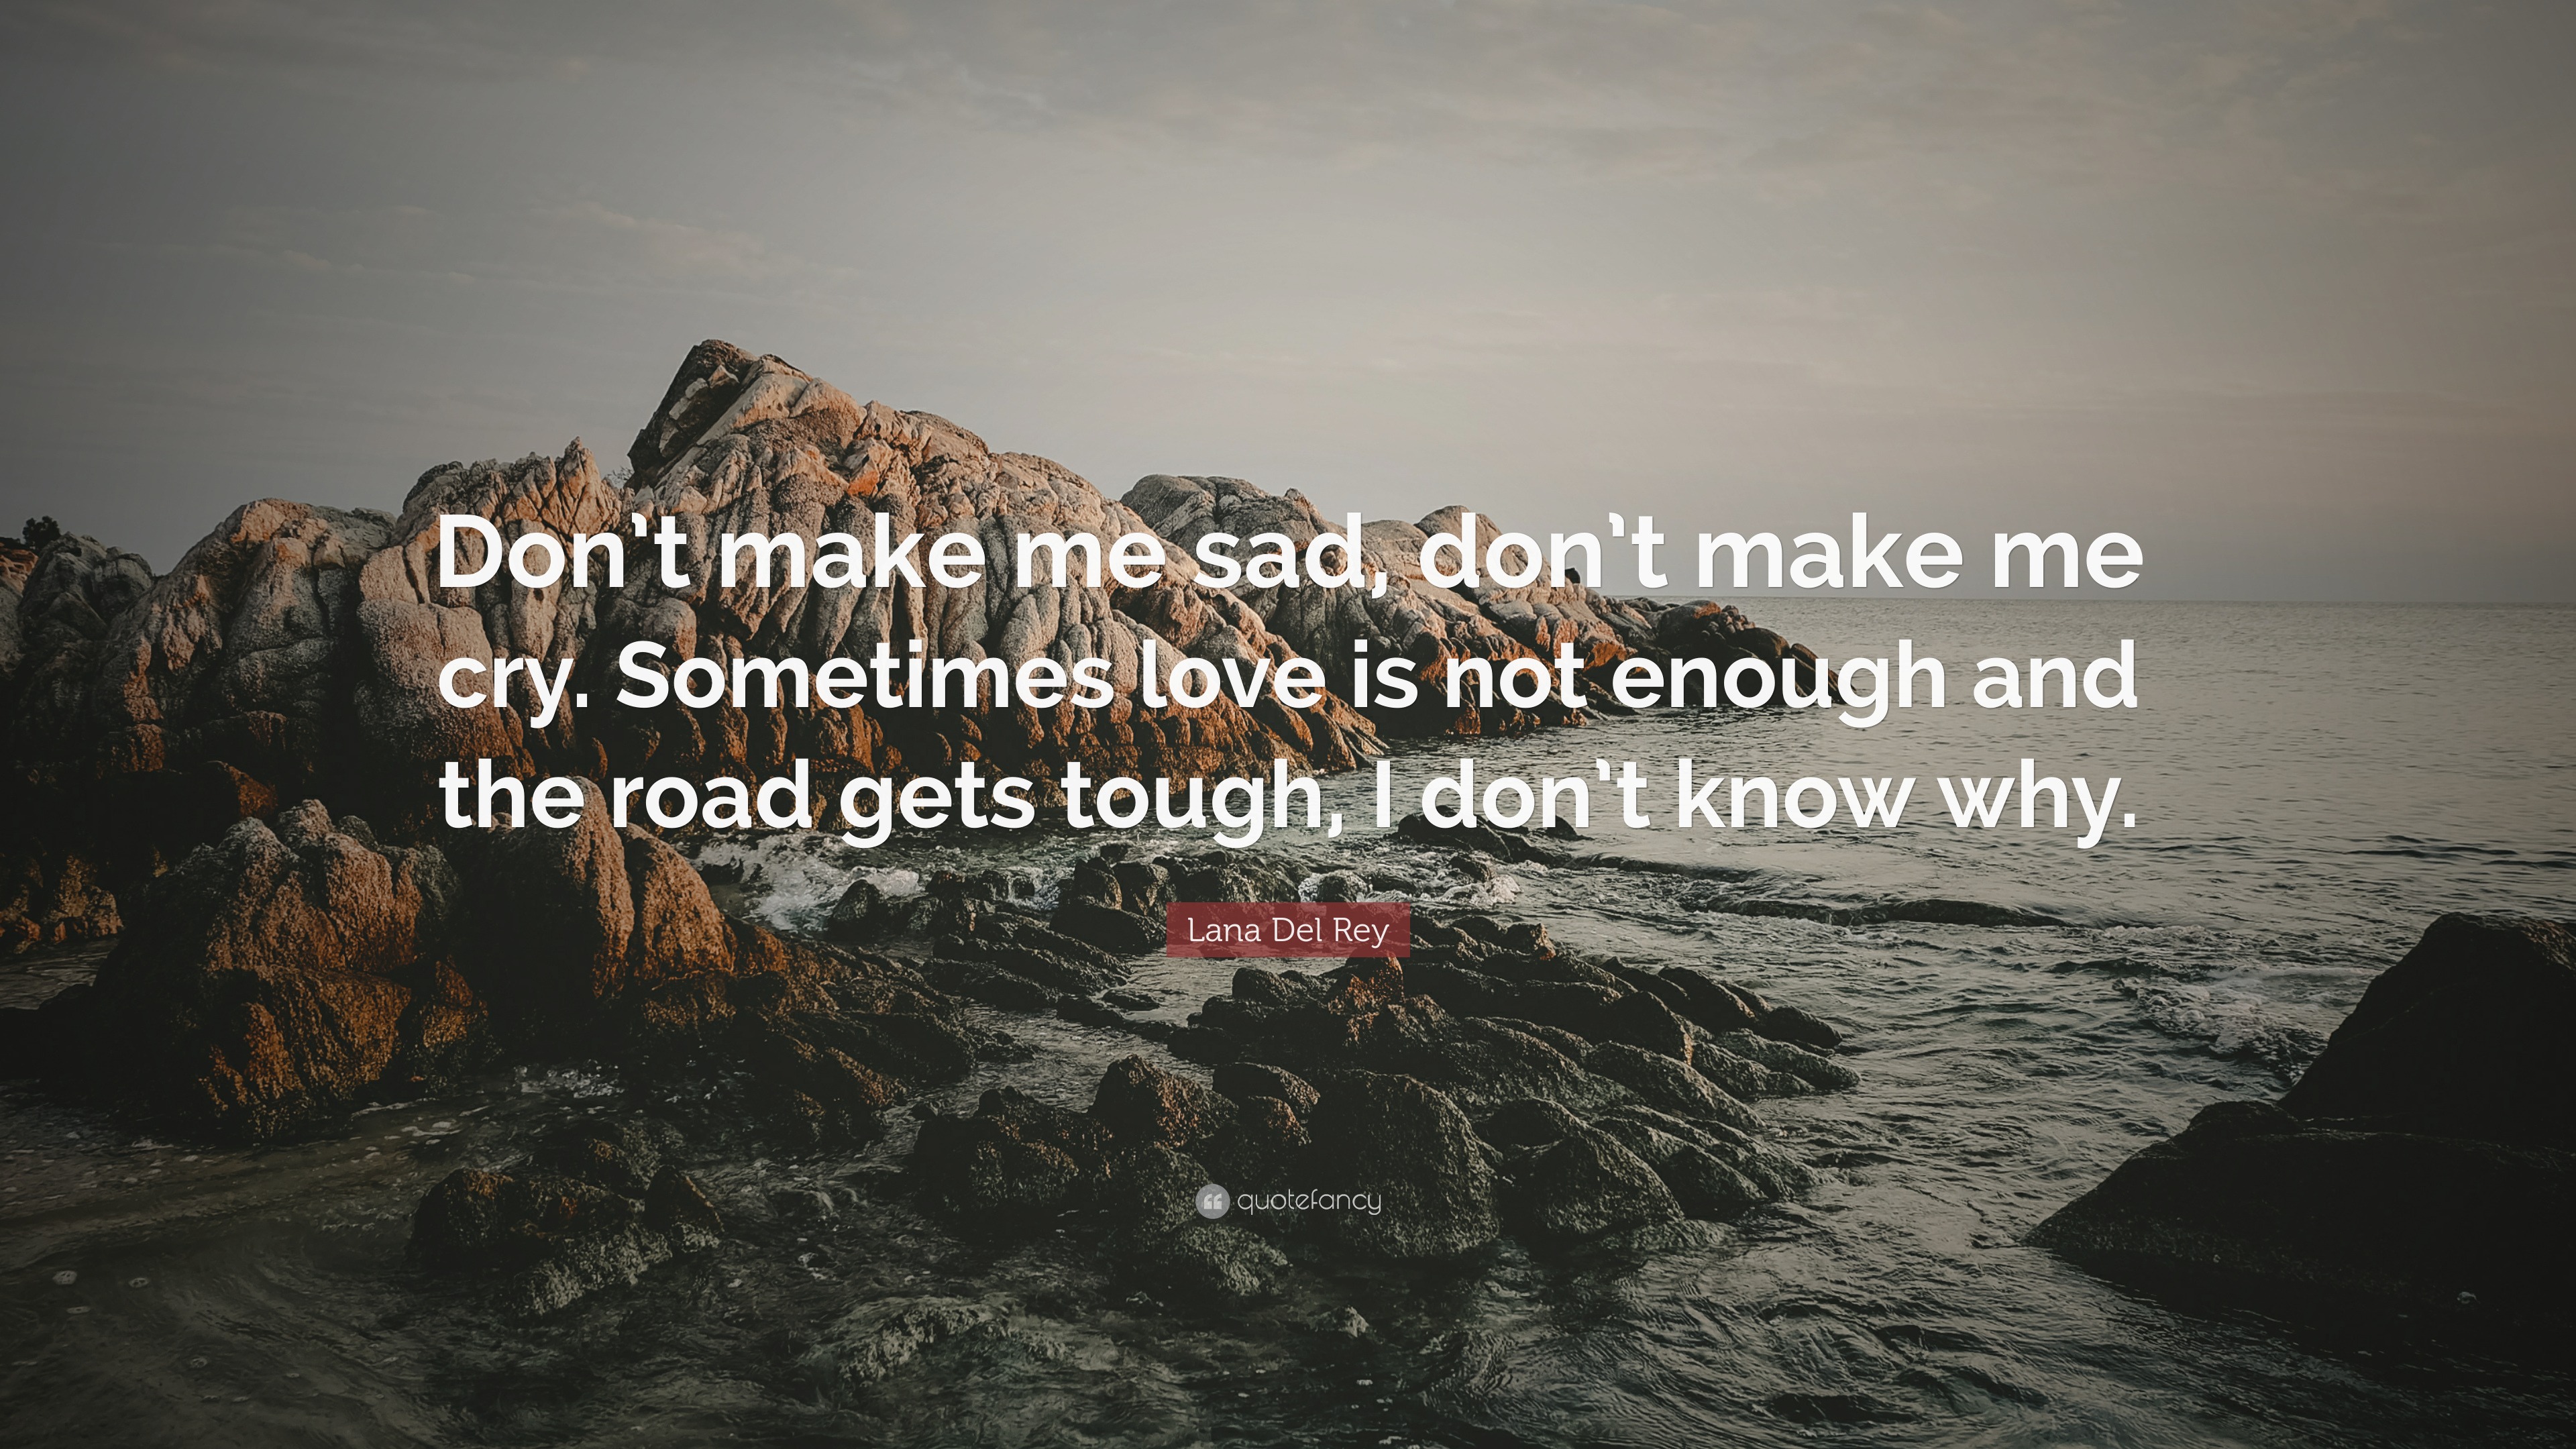 Lana Del Rey Quote “Don t make me sad don t